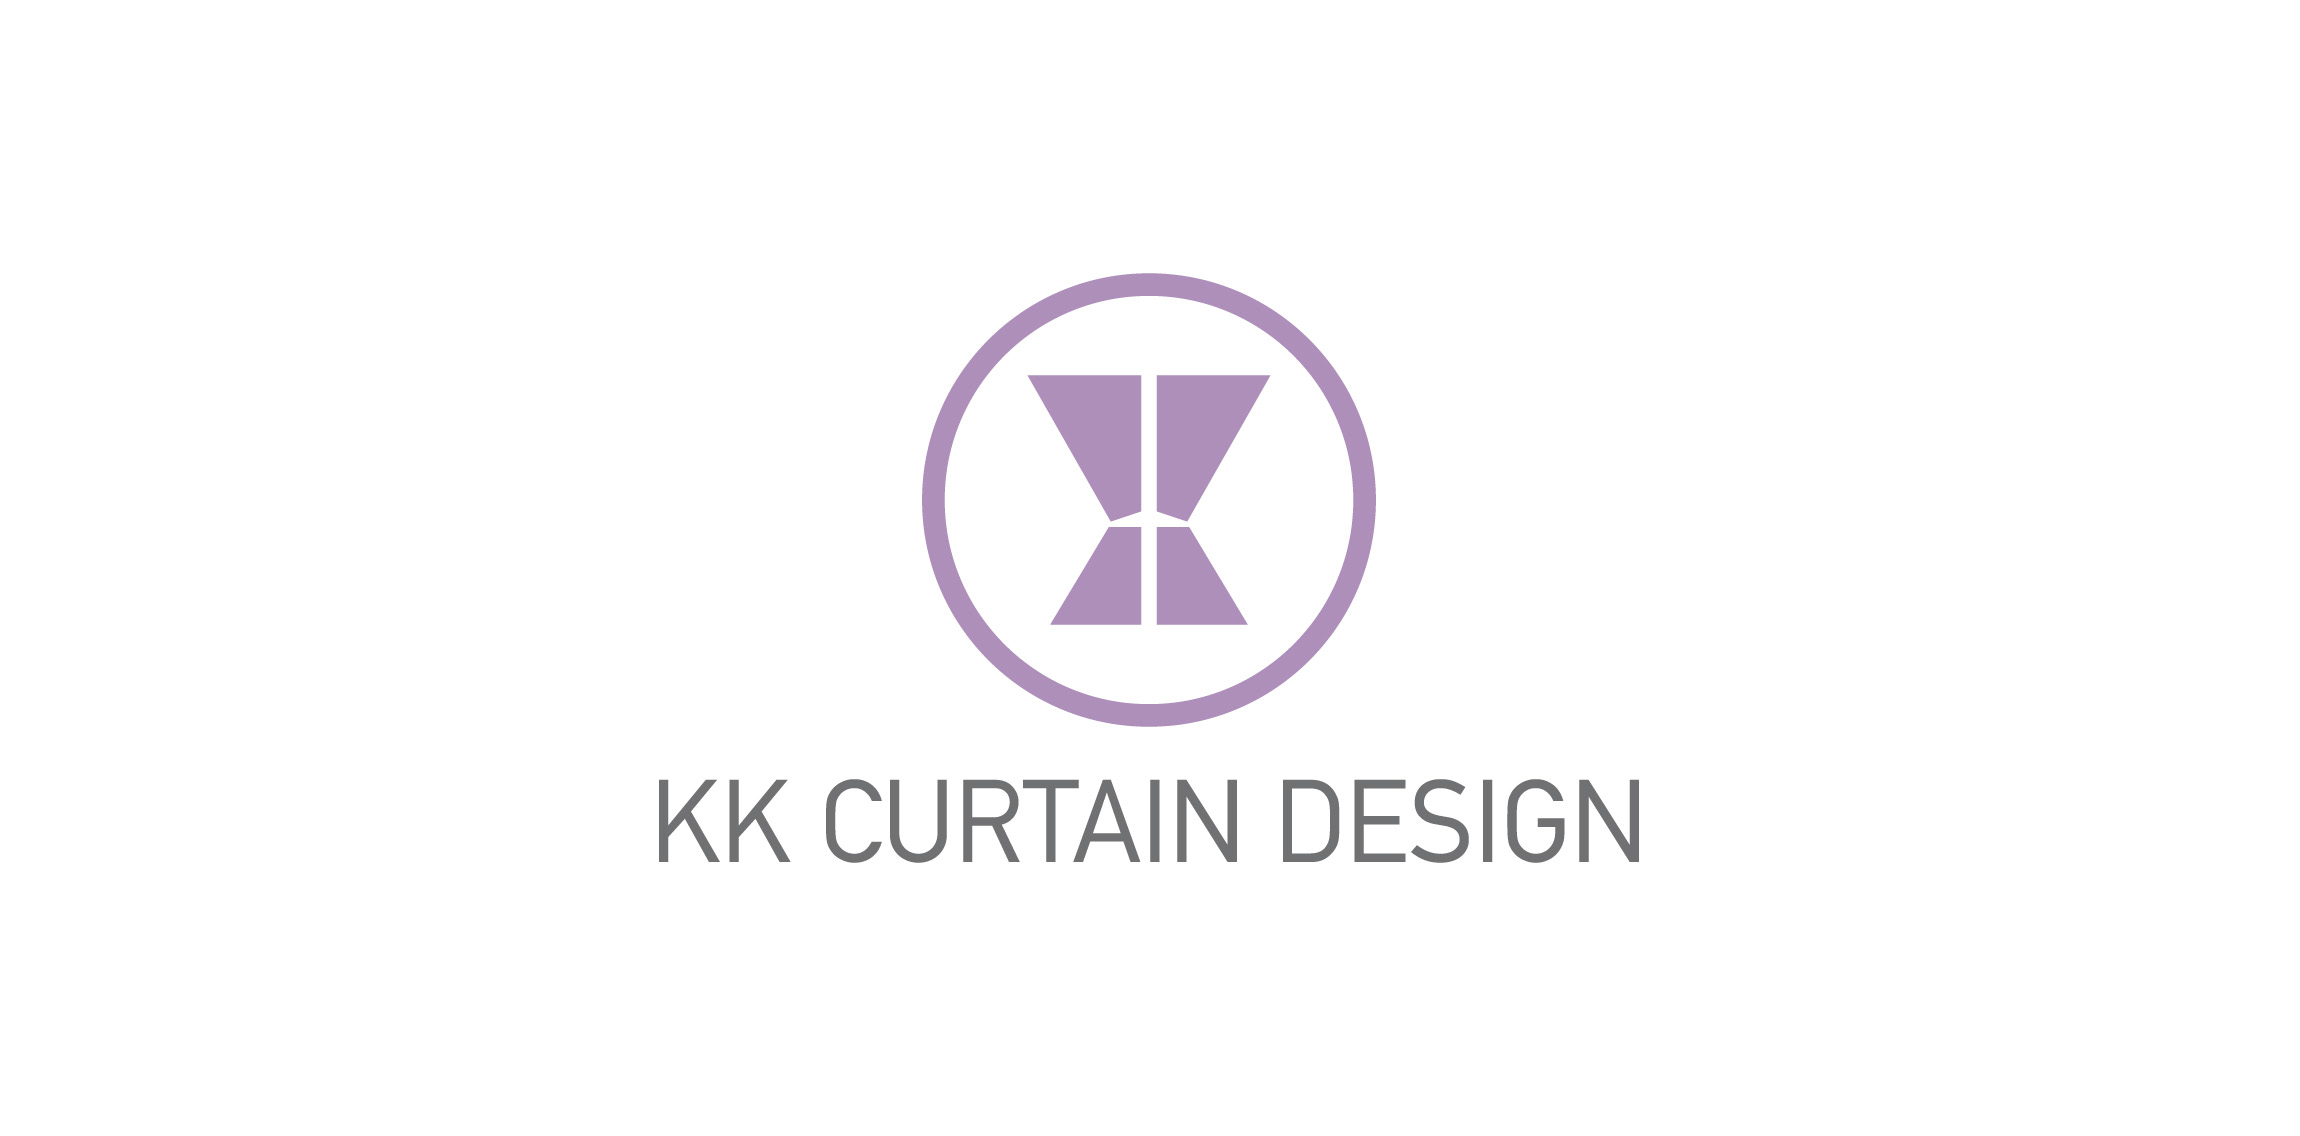 KK Curtain Design